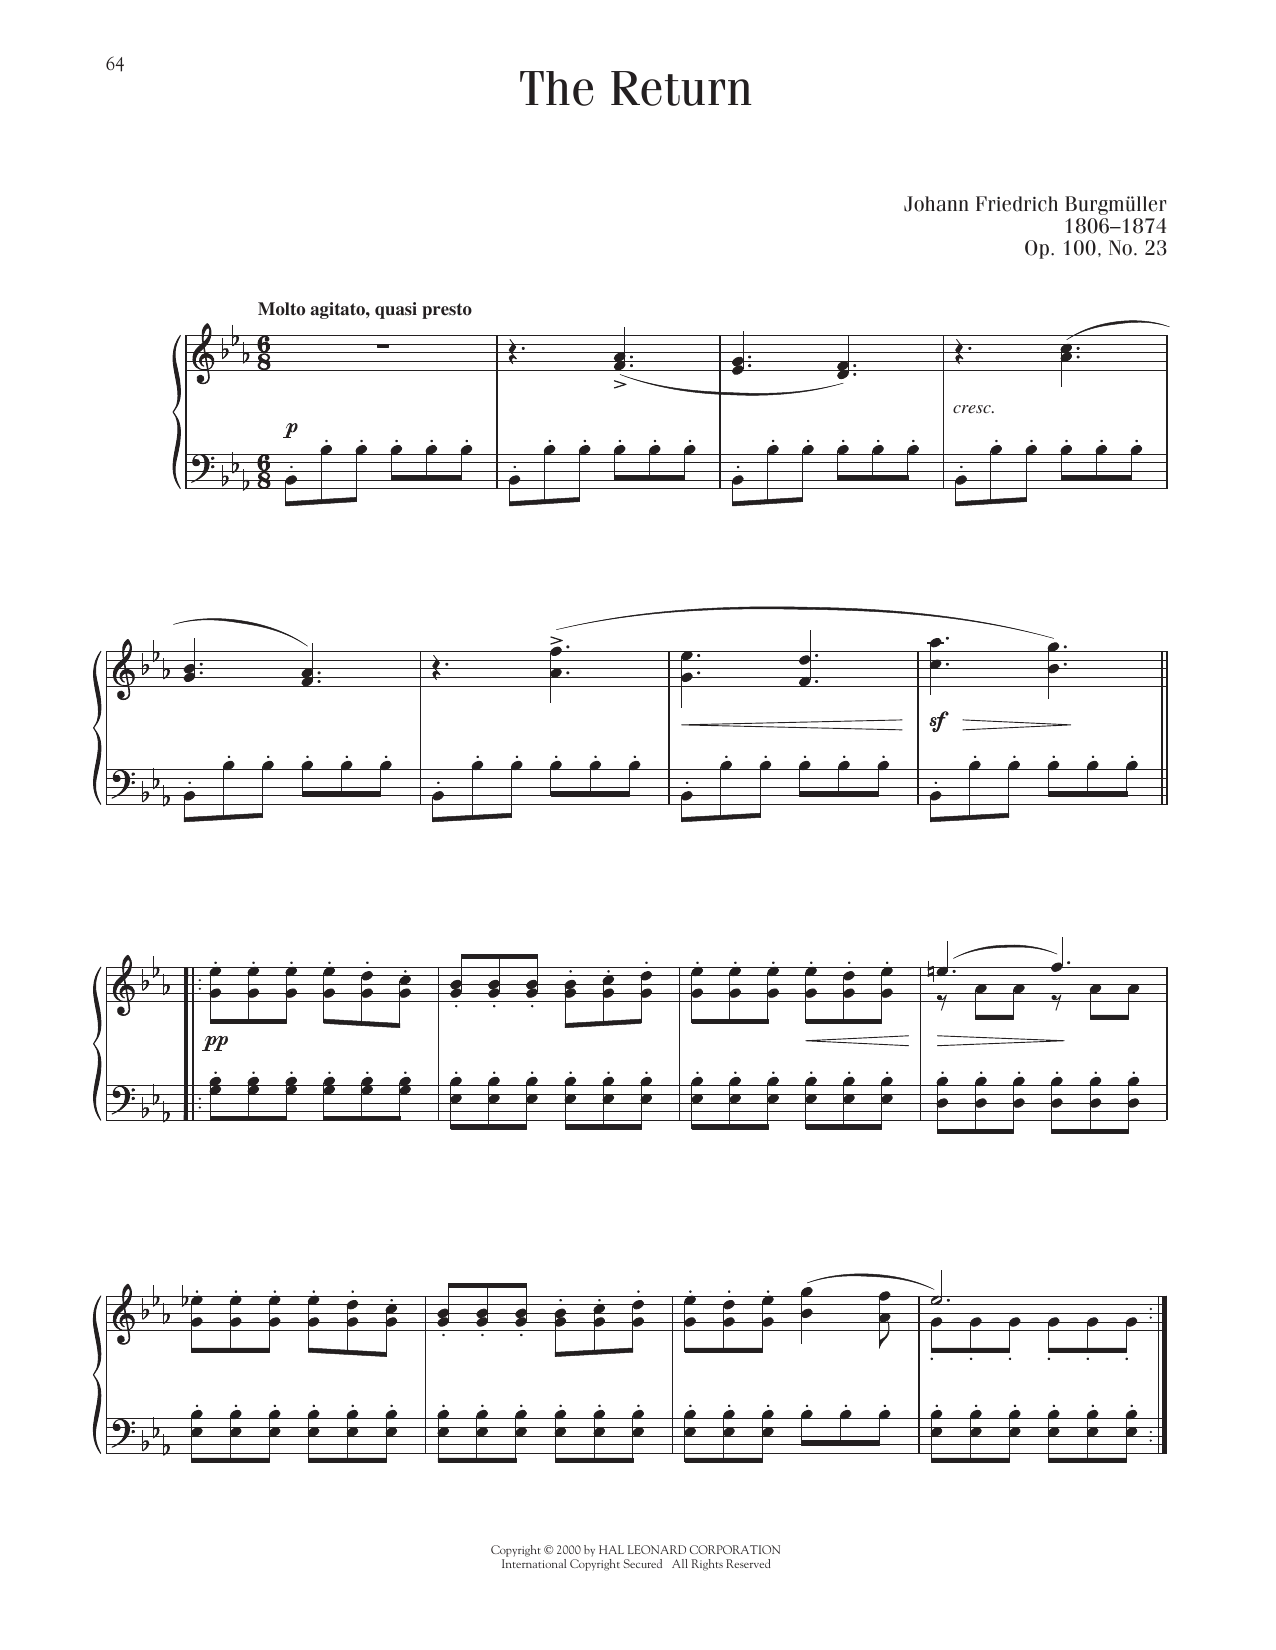 Johann Friedrich Burgmuller The Return, Op. 100, No. 23 sheet music notes printable PDF score